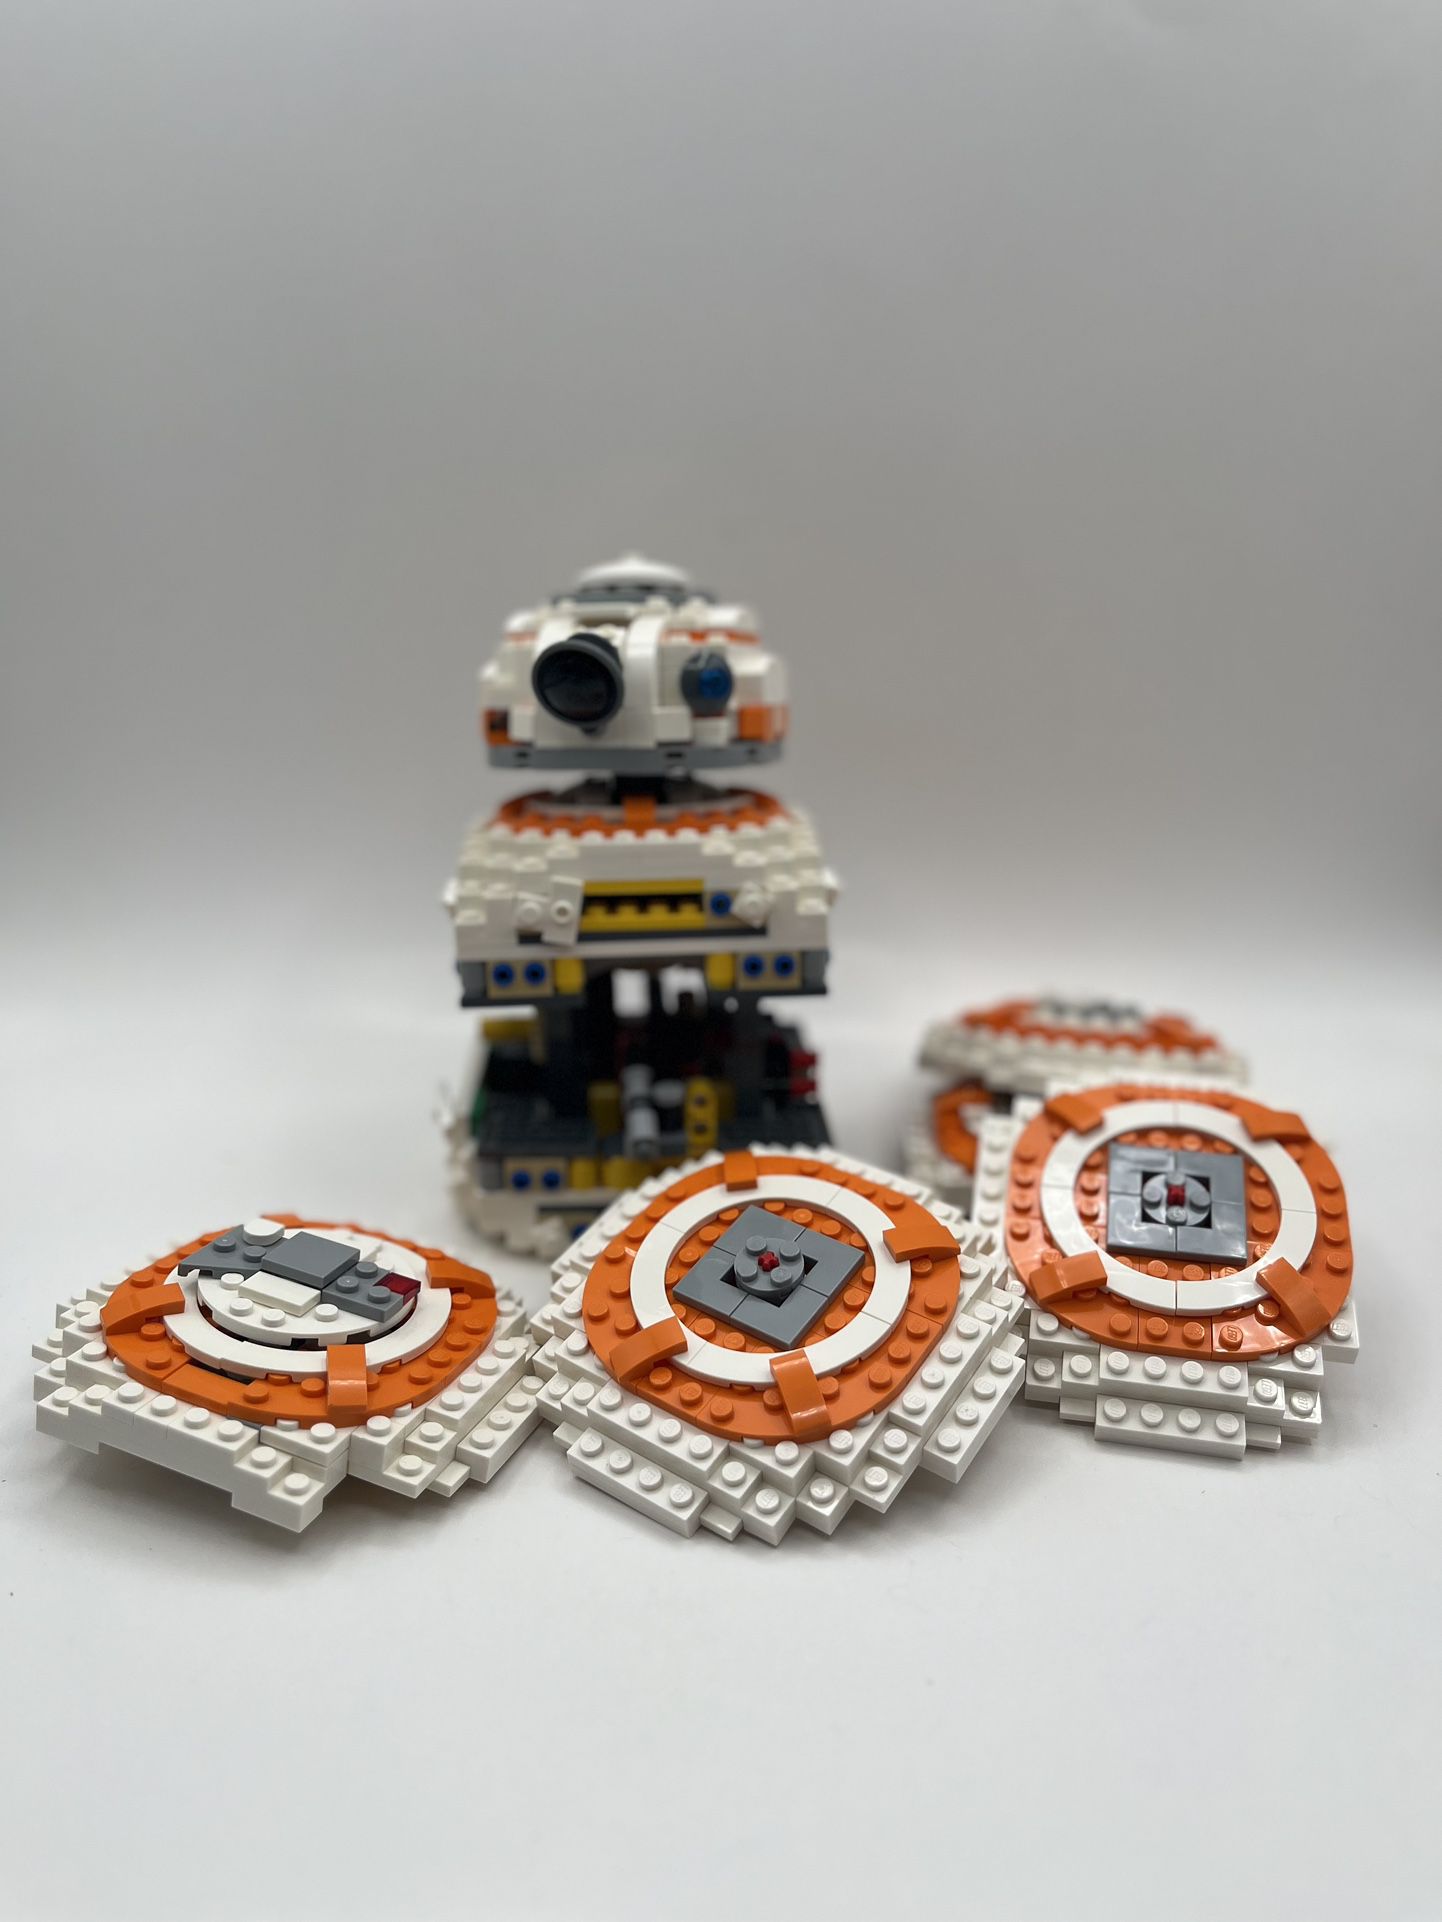 Lego Star Wars BB-8 -75187- Incomplete 